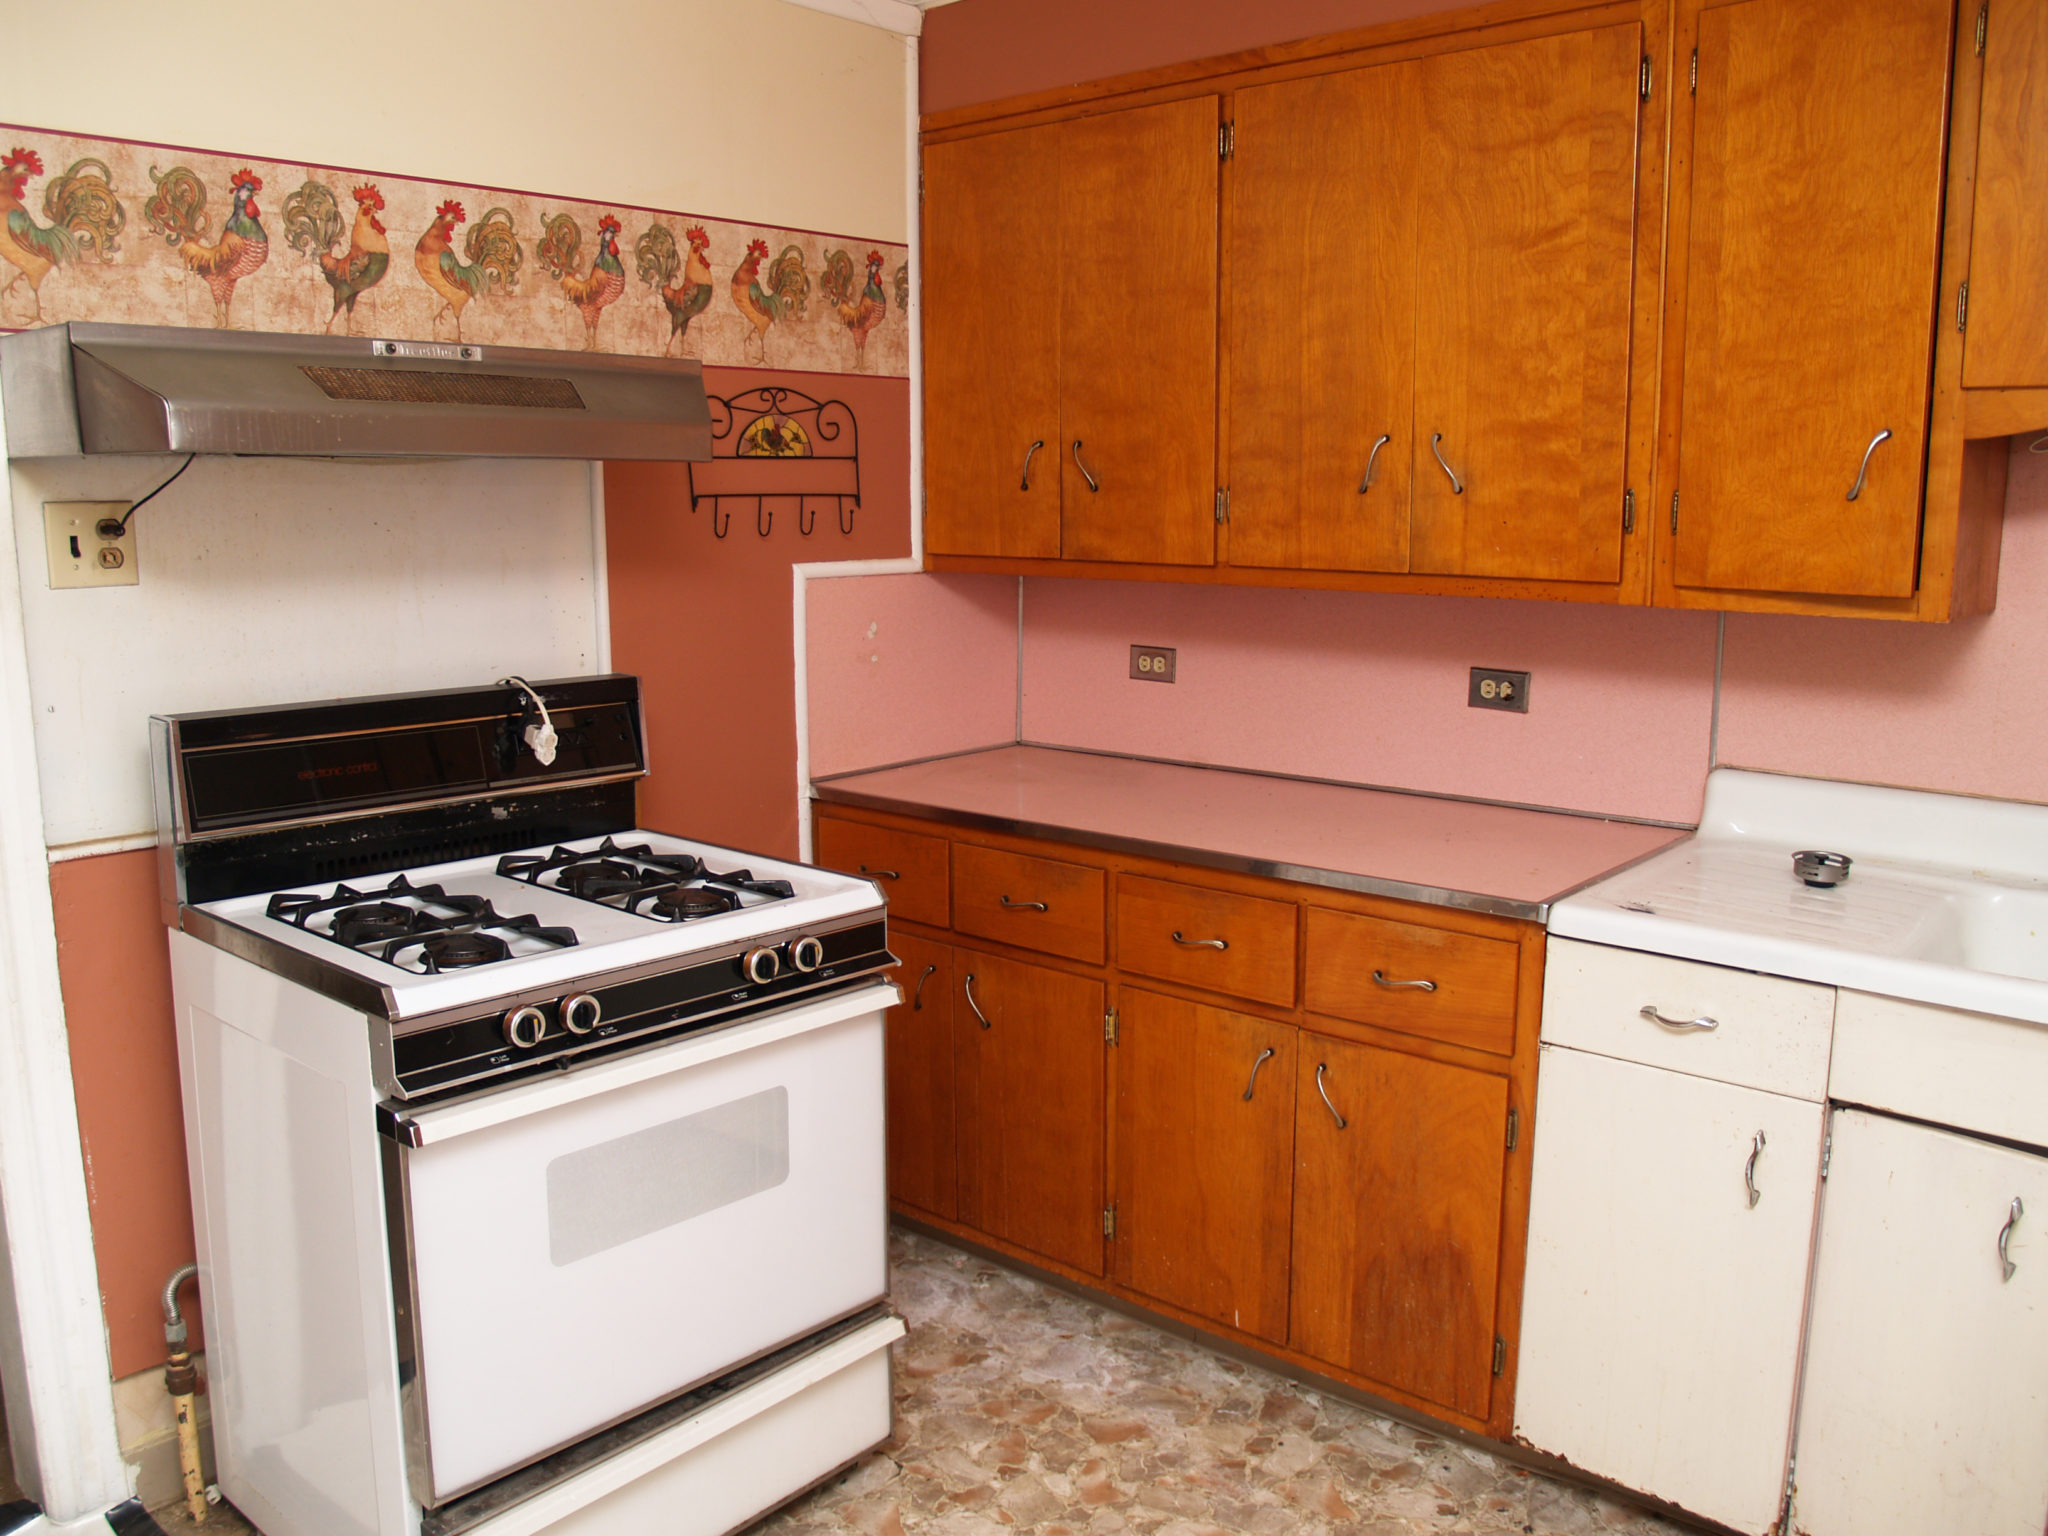 Old kitchen with pink backsplash and wallpaper border